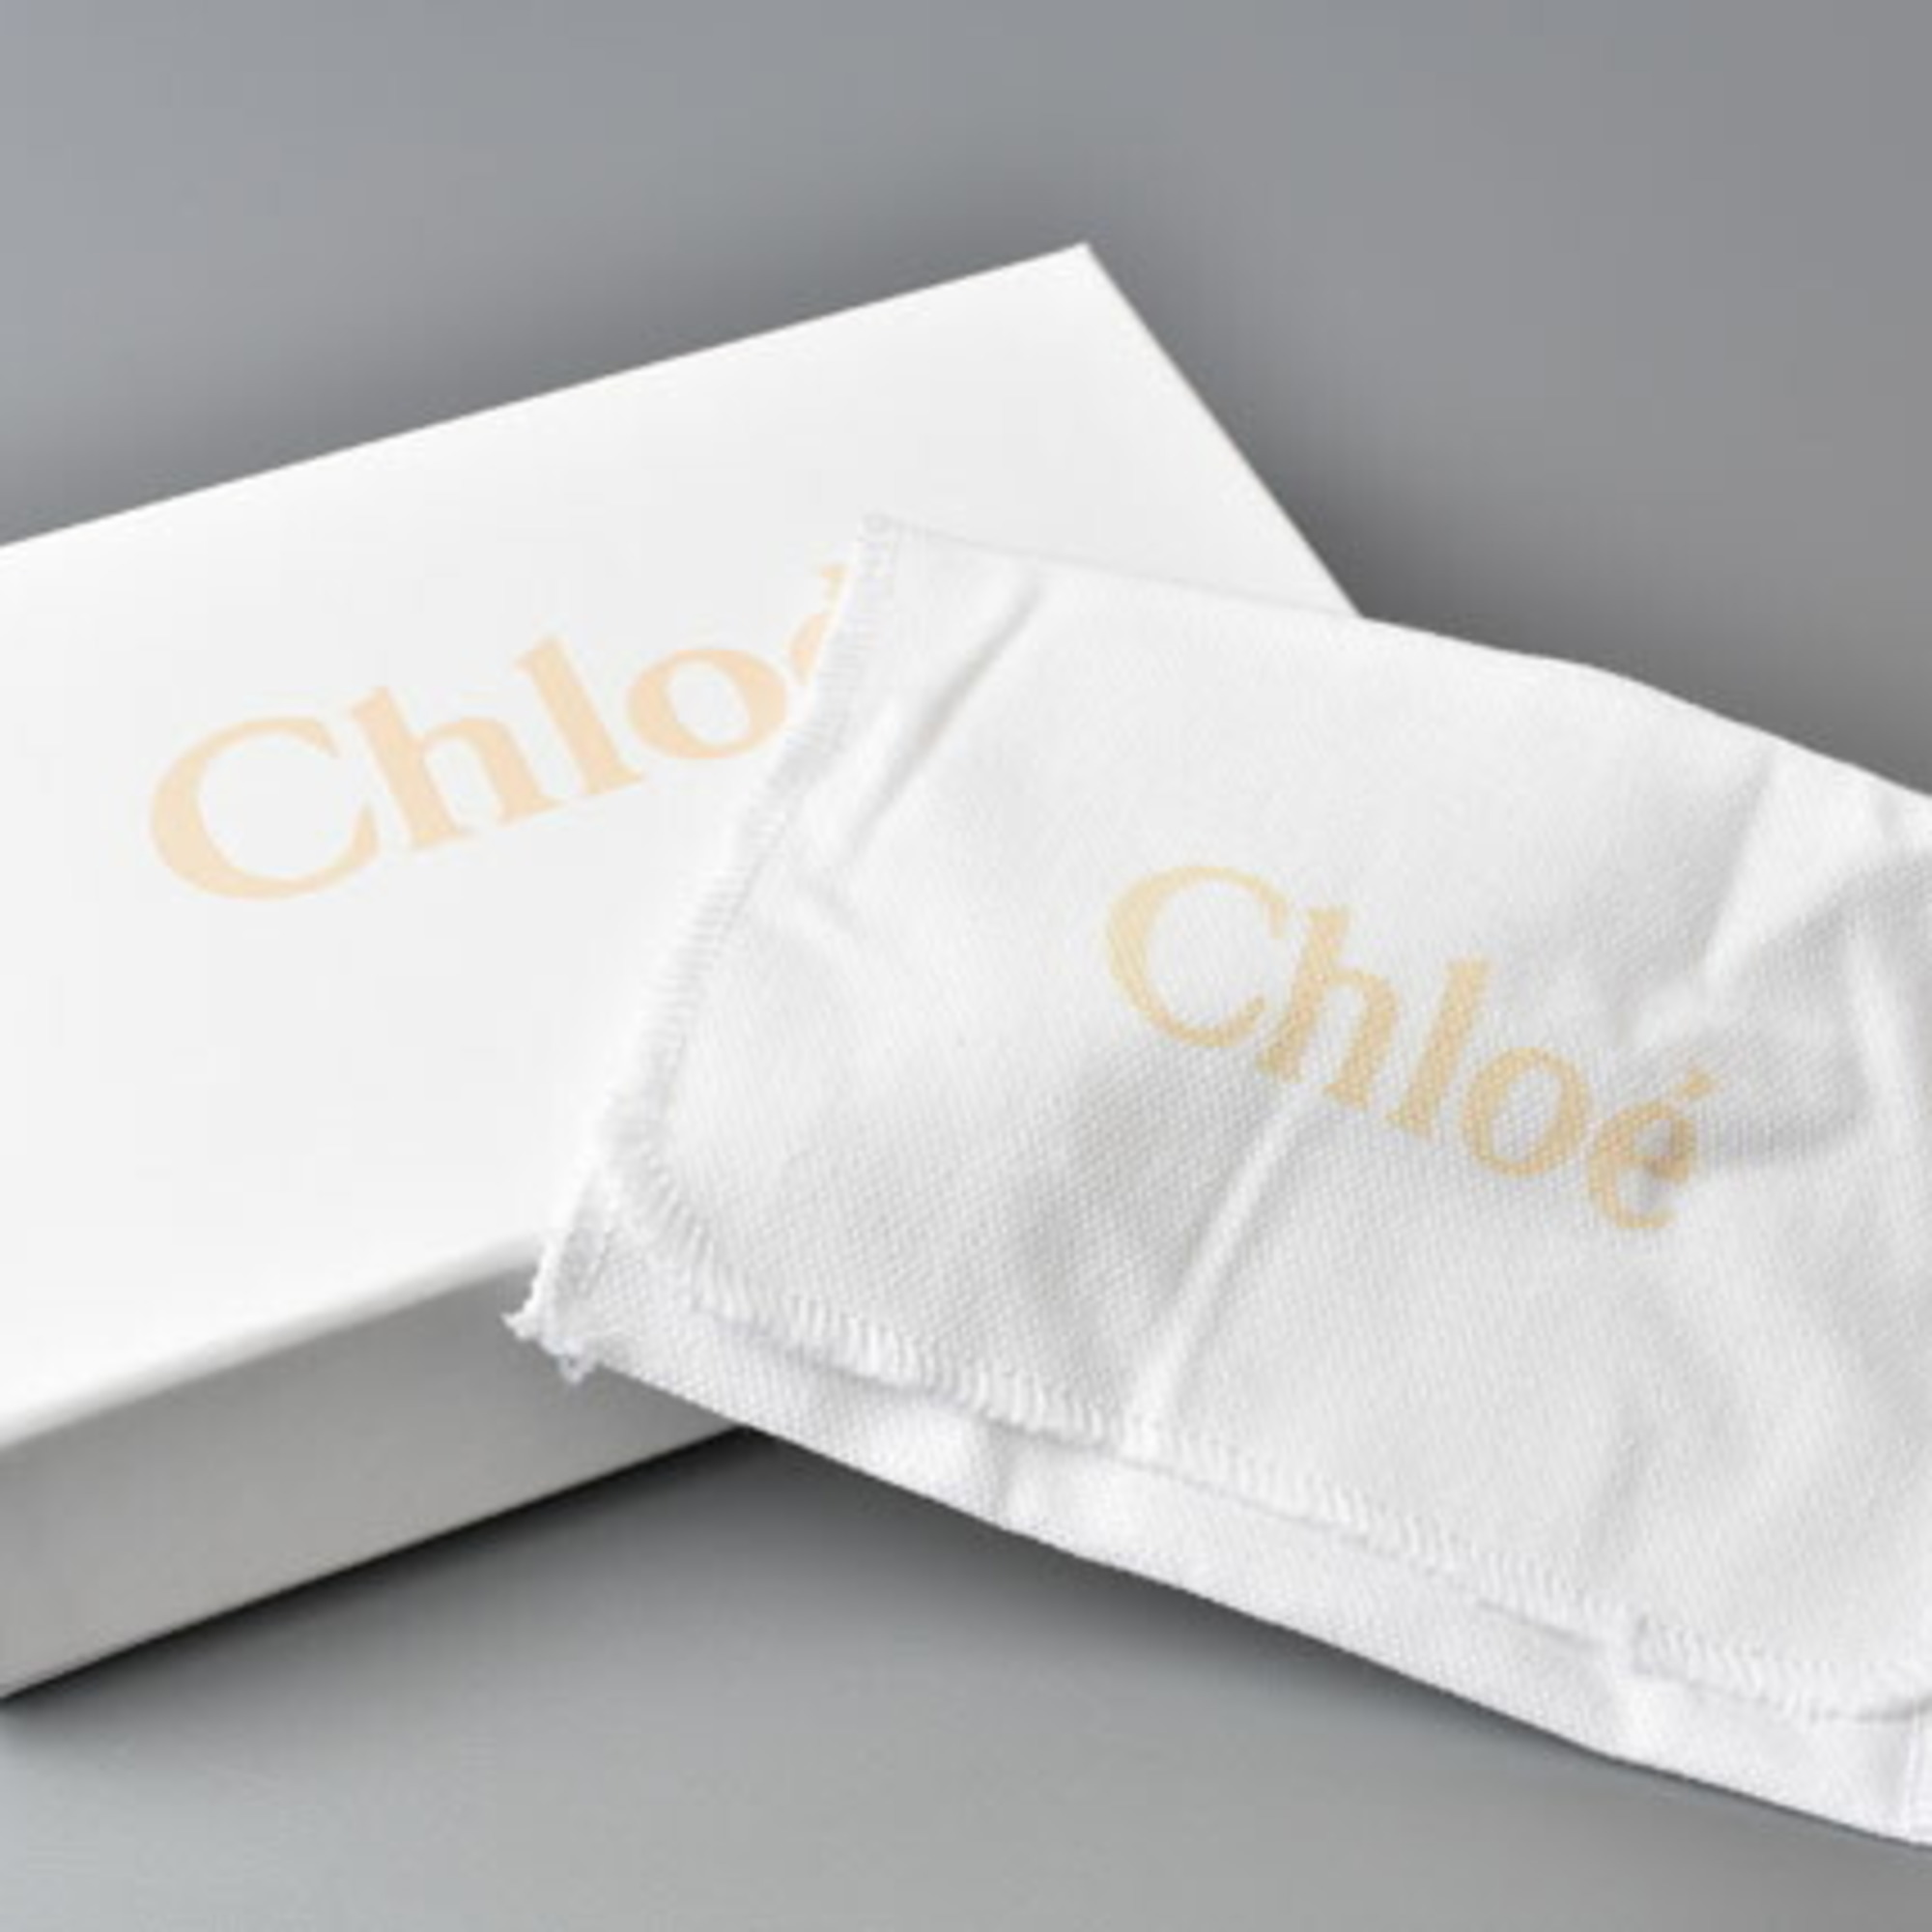 Chloé Chloe key ring bag charm mouse motif love natural silver